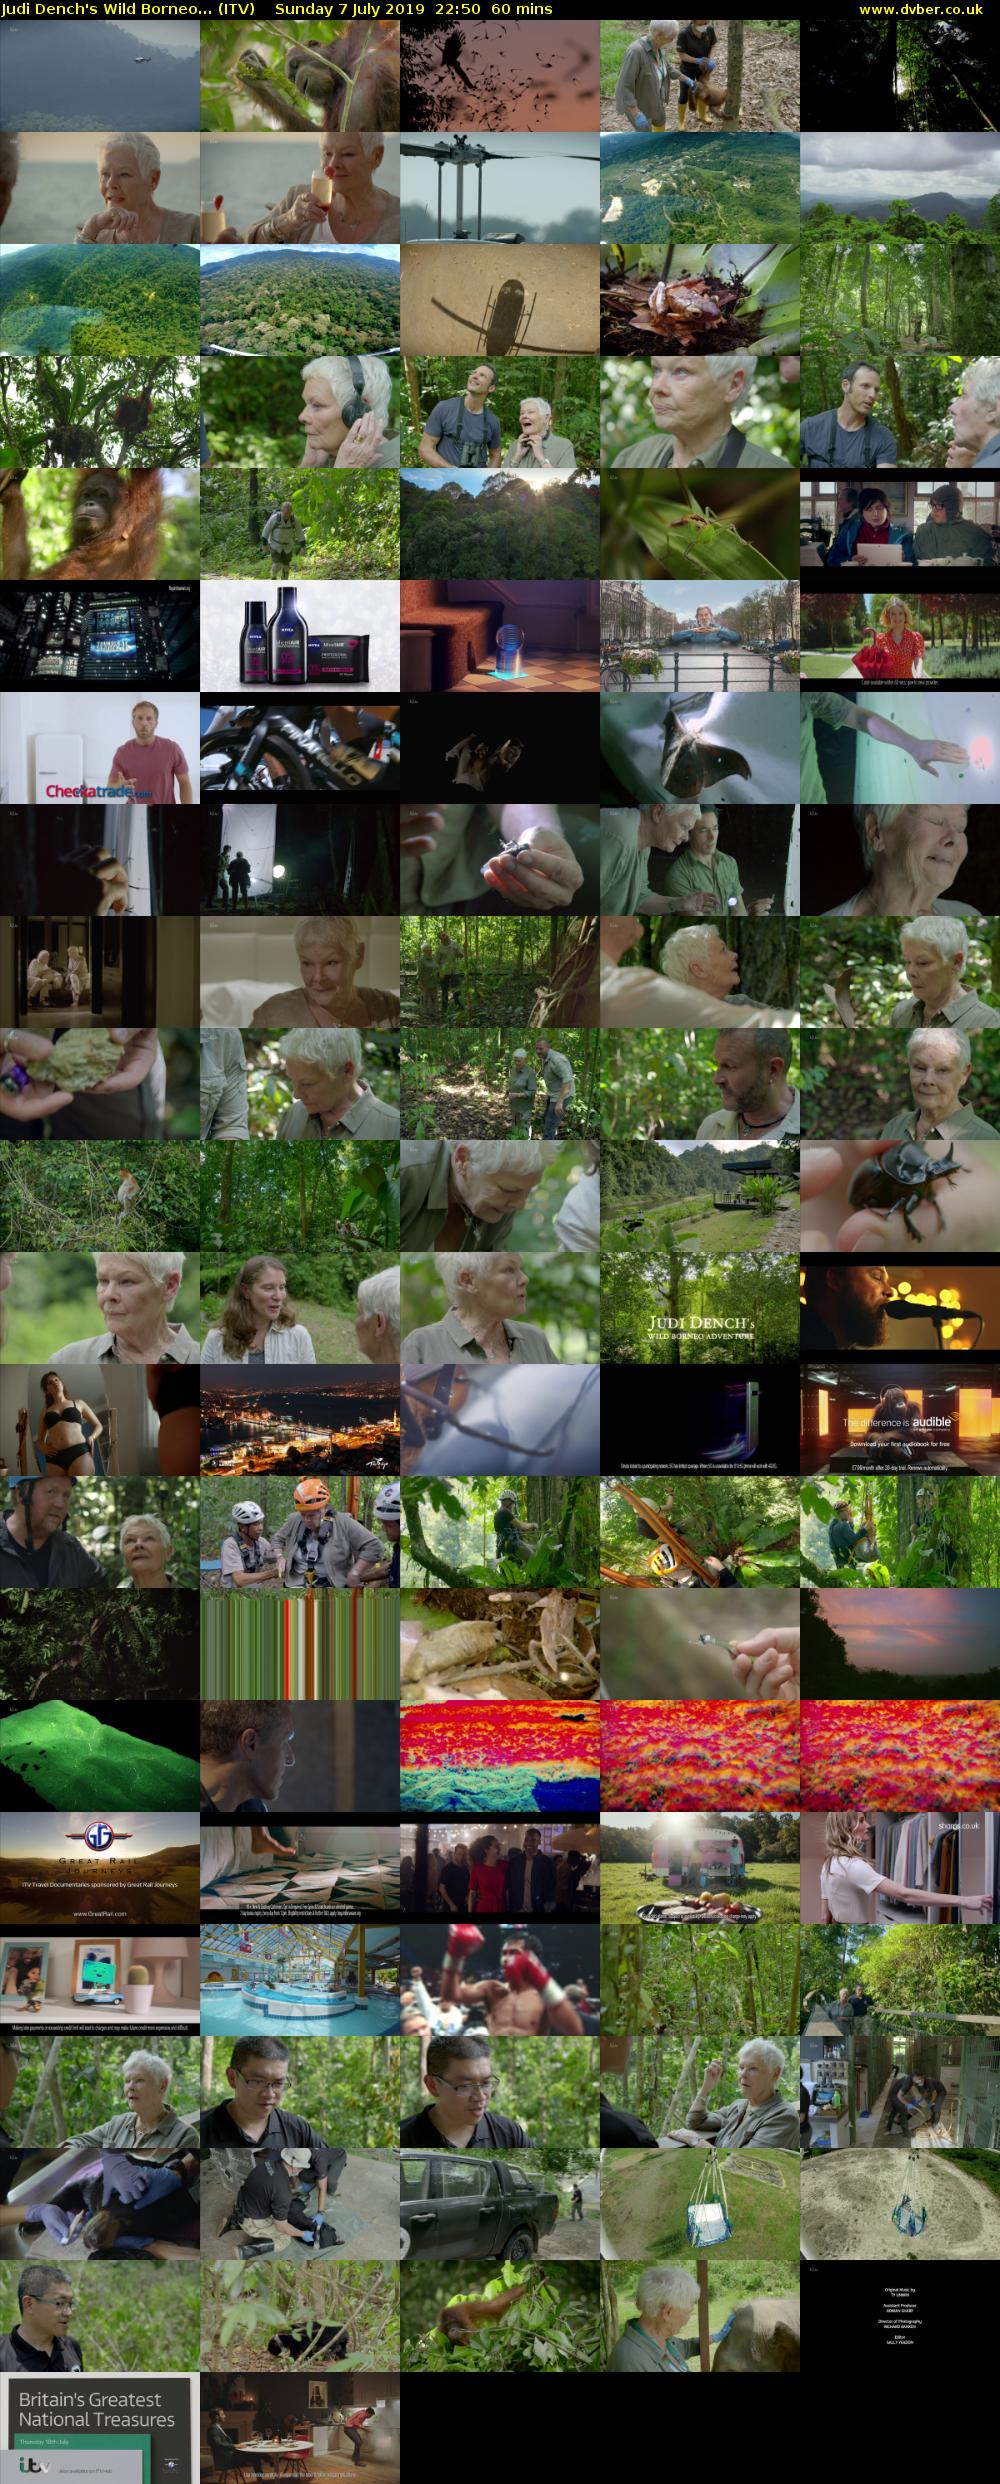 Judi Dench's Wild Borneo... (ITV) Sunday 7 July 2019 22:50 - 23:50